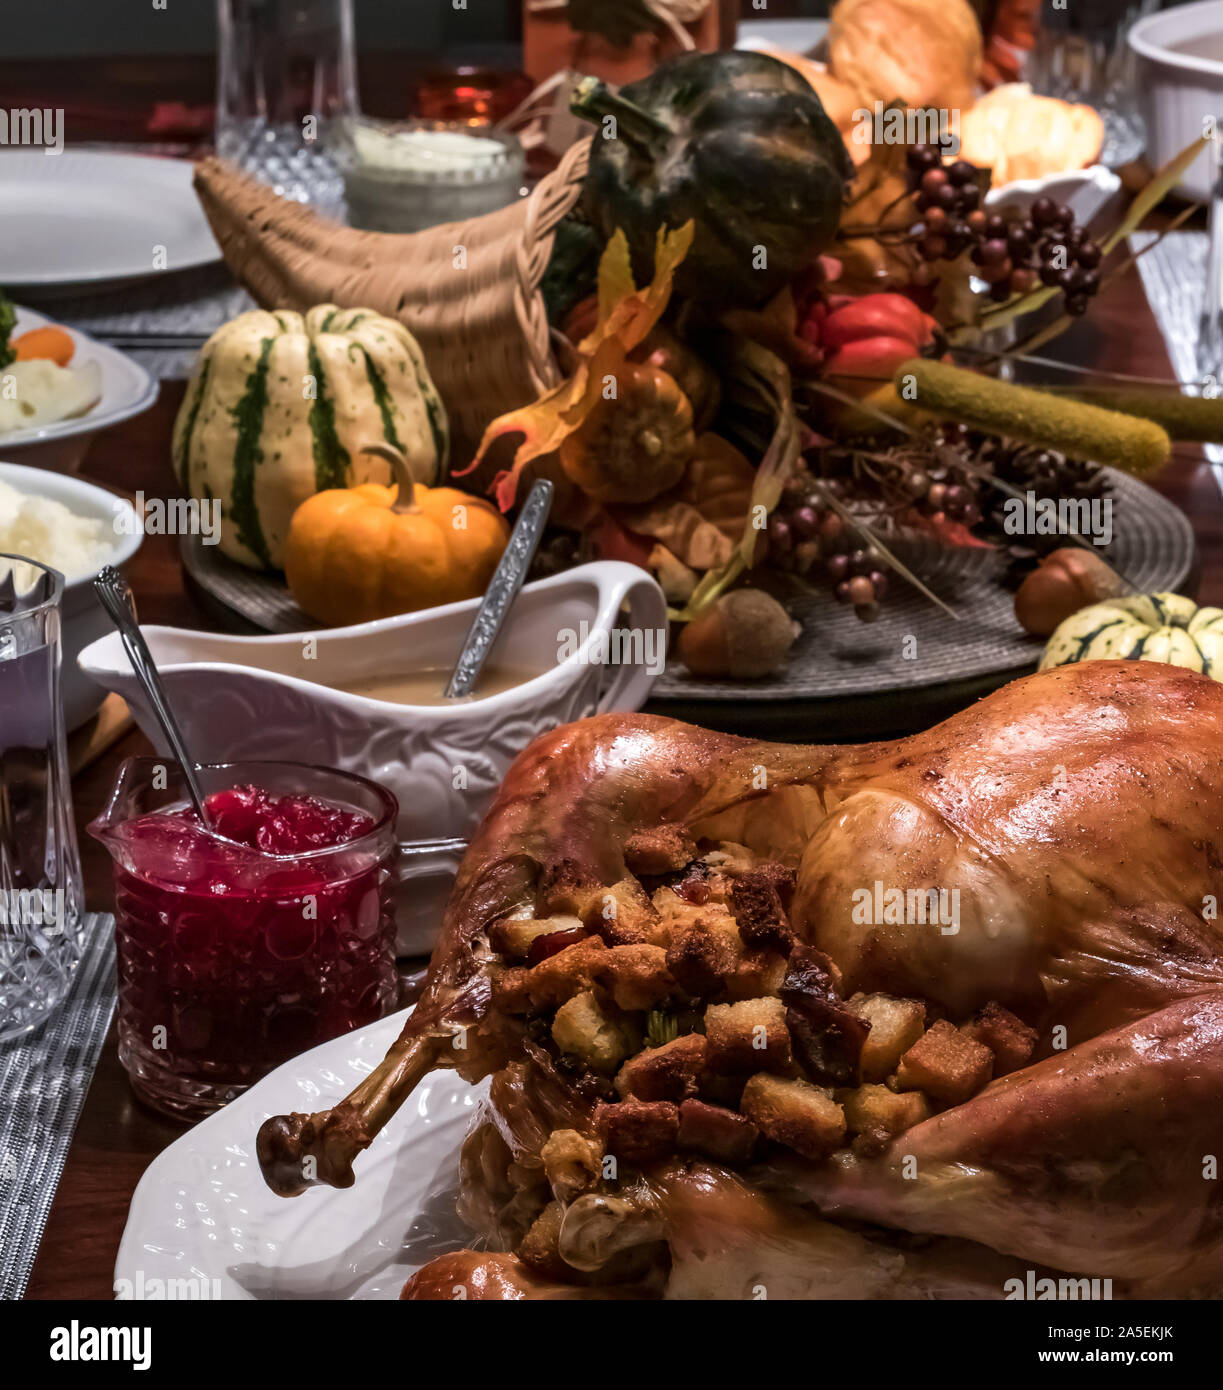 Thanksgiving turkey dinner Stock Photo - Alamy